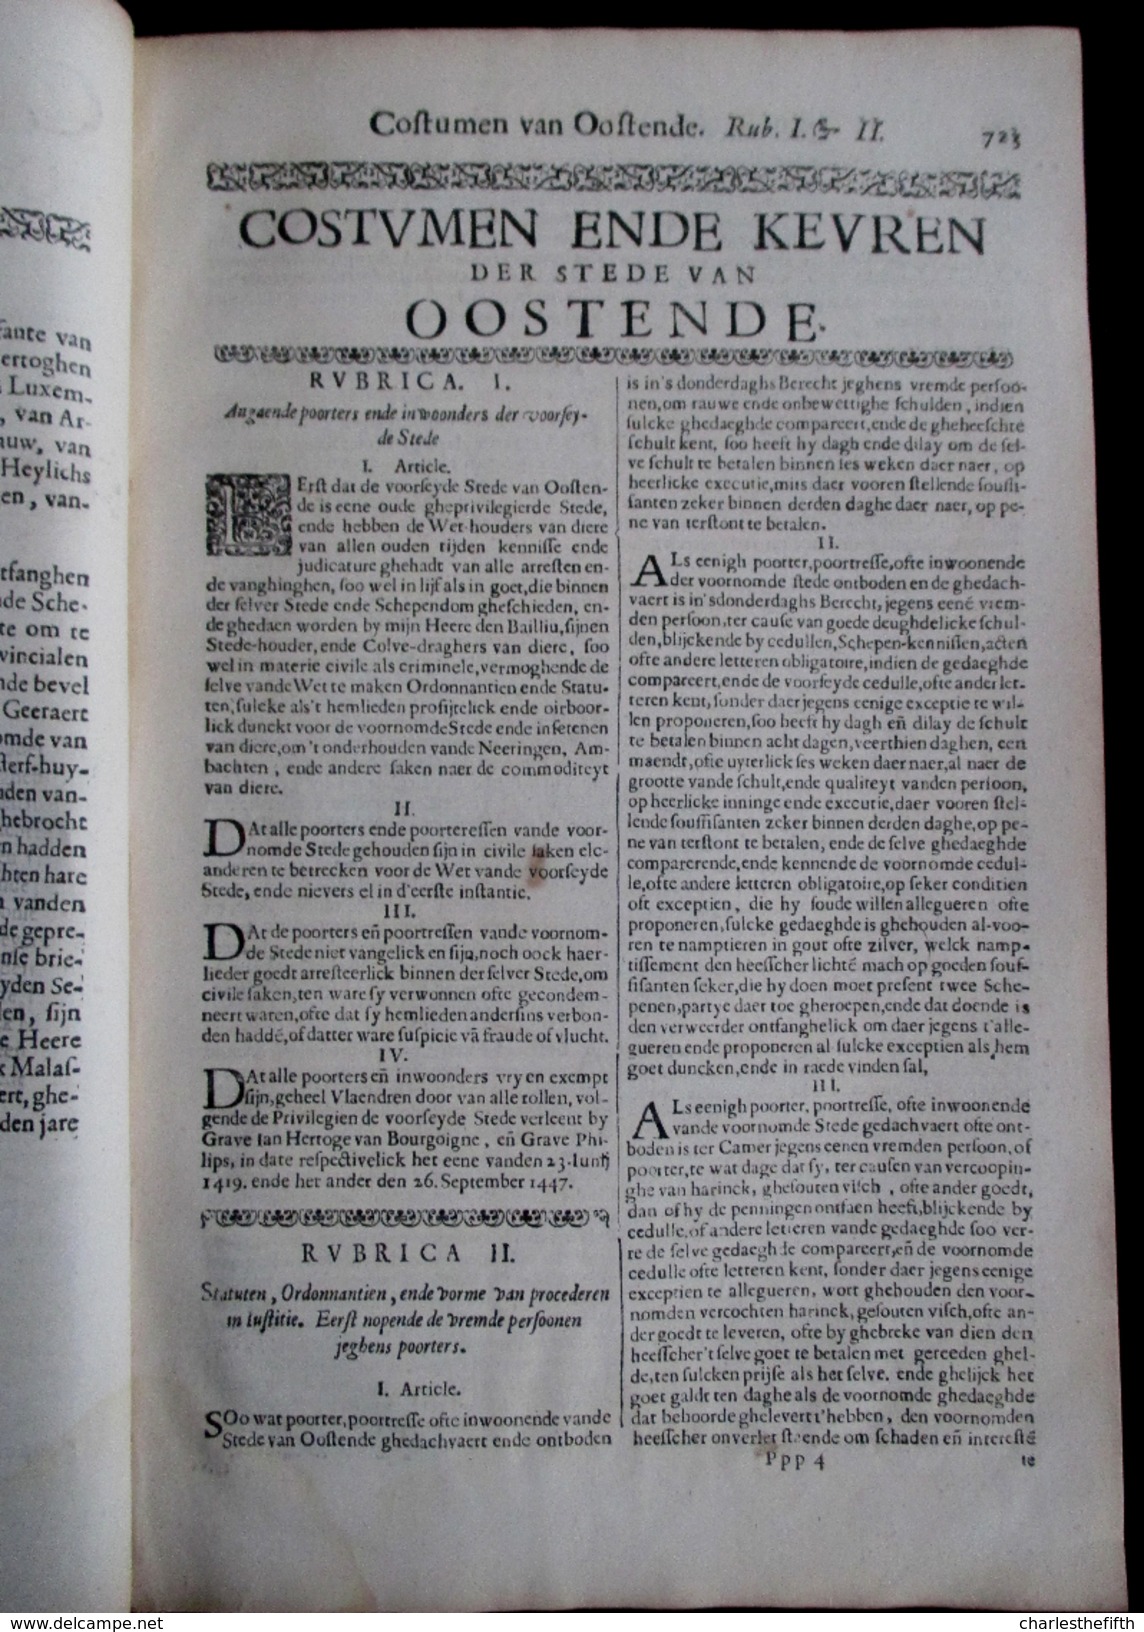 COSTUMEN ENDE KEUREN DER STEDE VAN OOSTENDE By MICHIEL KNOBBAERT ( Volledig Deel Over Oostende ) Herdruckt  't Jaer 1674 - Vecchi